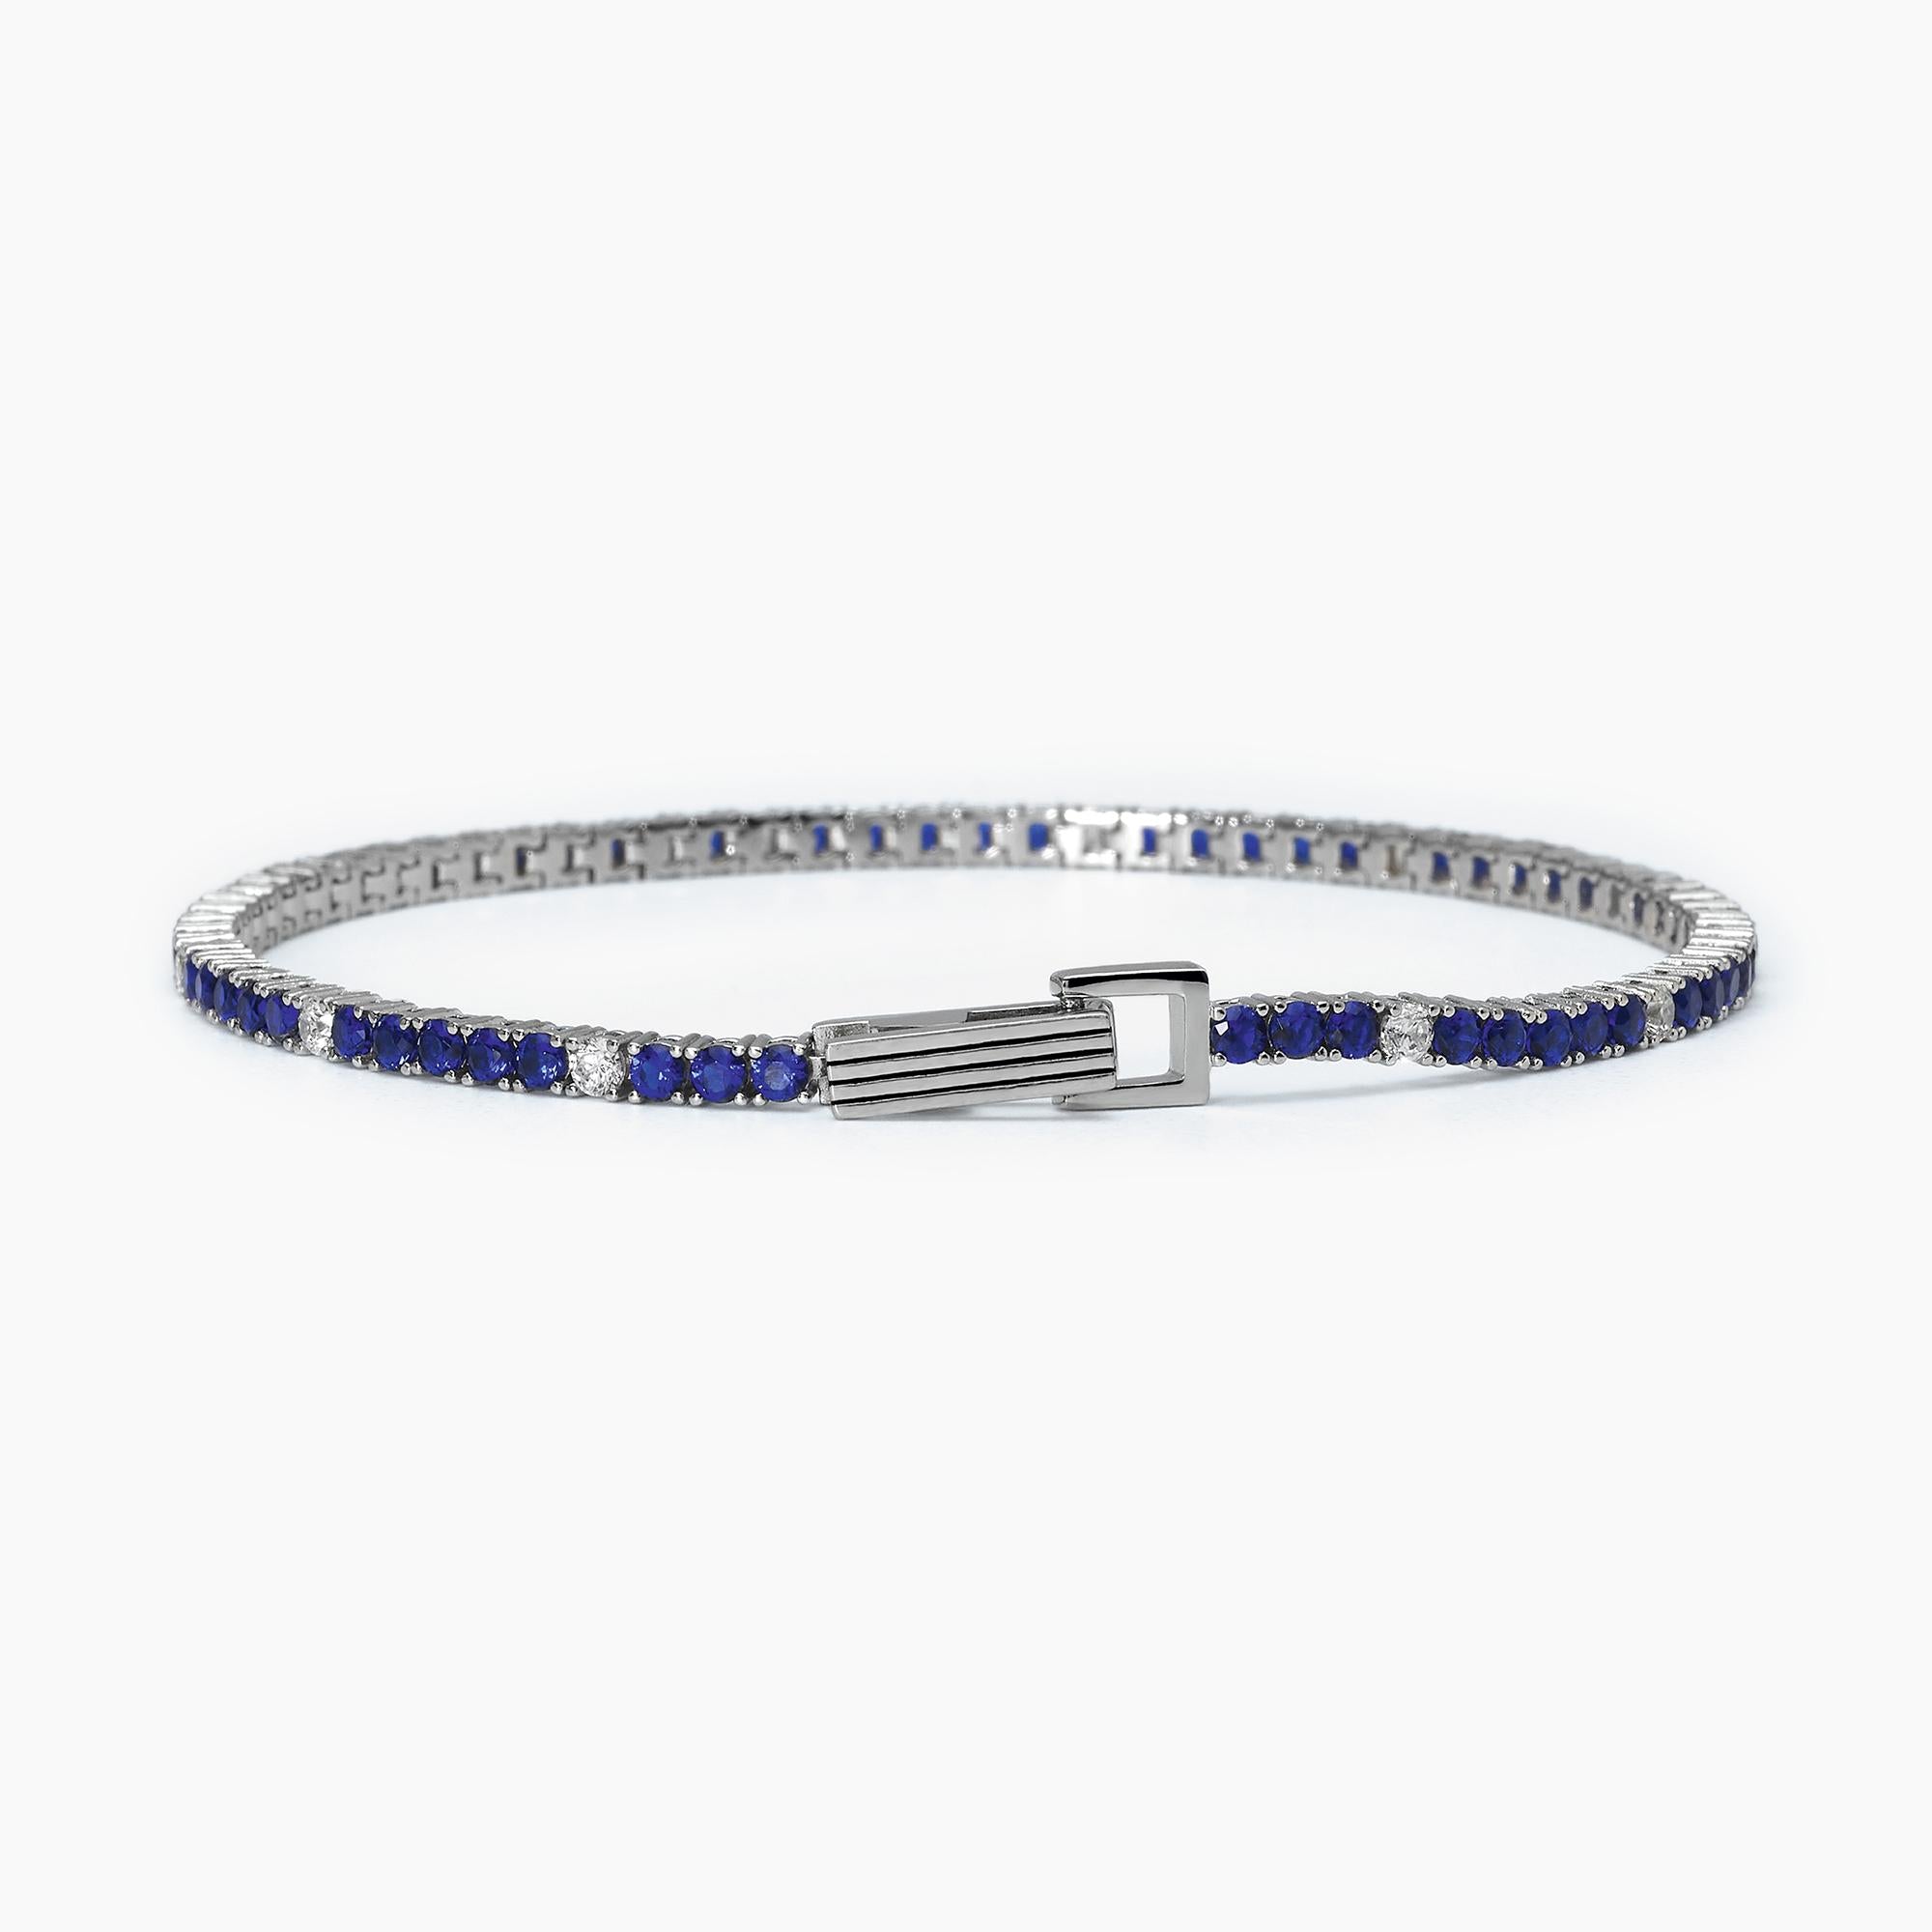 Mabina Man - Blue tennis bracelet TENNIS CLUB - 533701-S